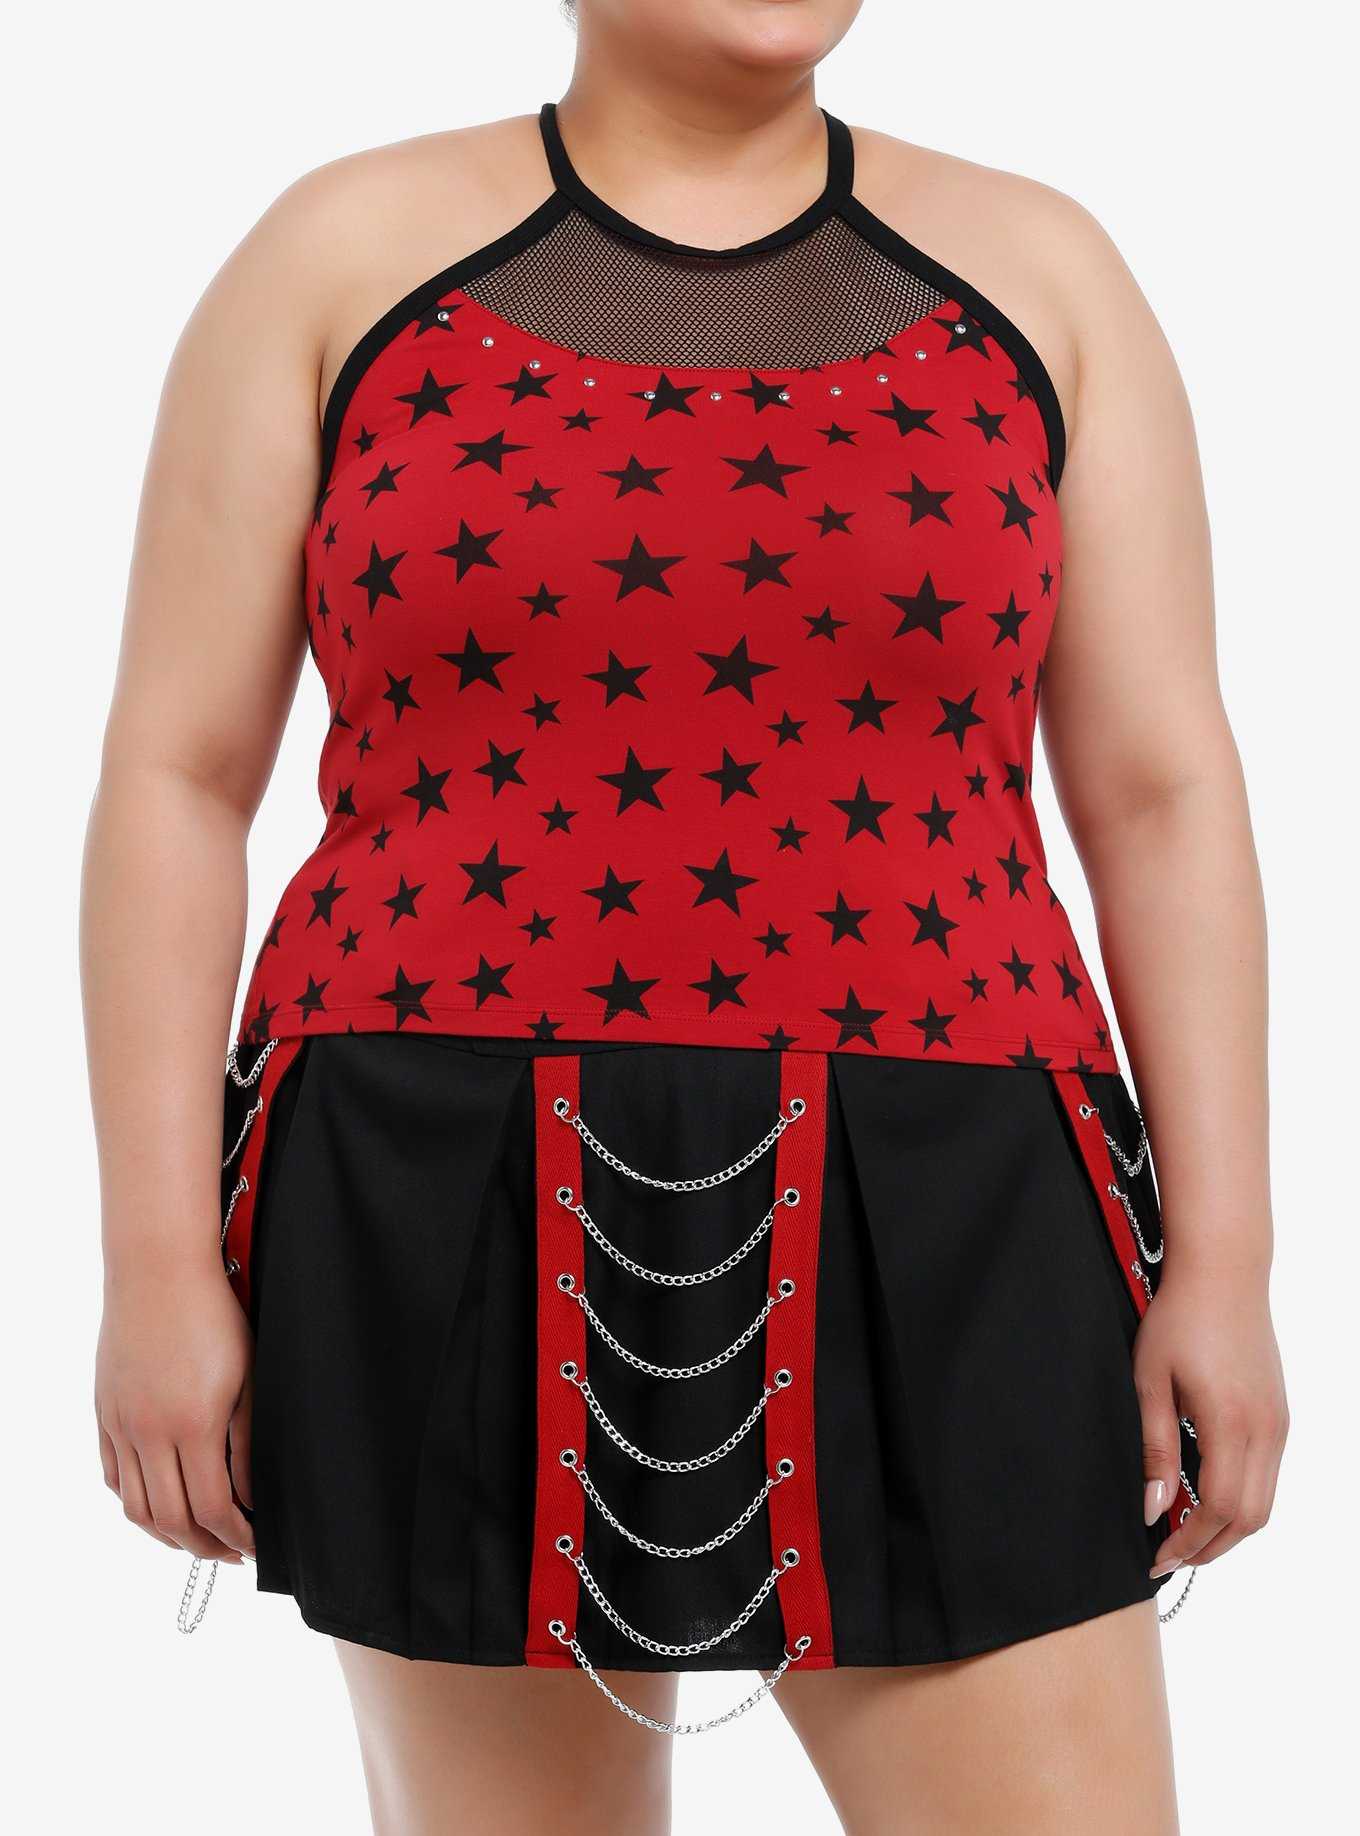 Social Collision Red & Black Star Fishnet Girls Tank Top Plus Size, , hi-res